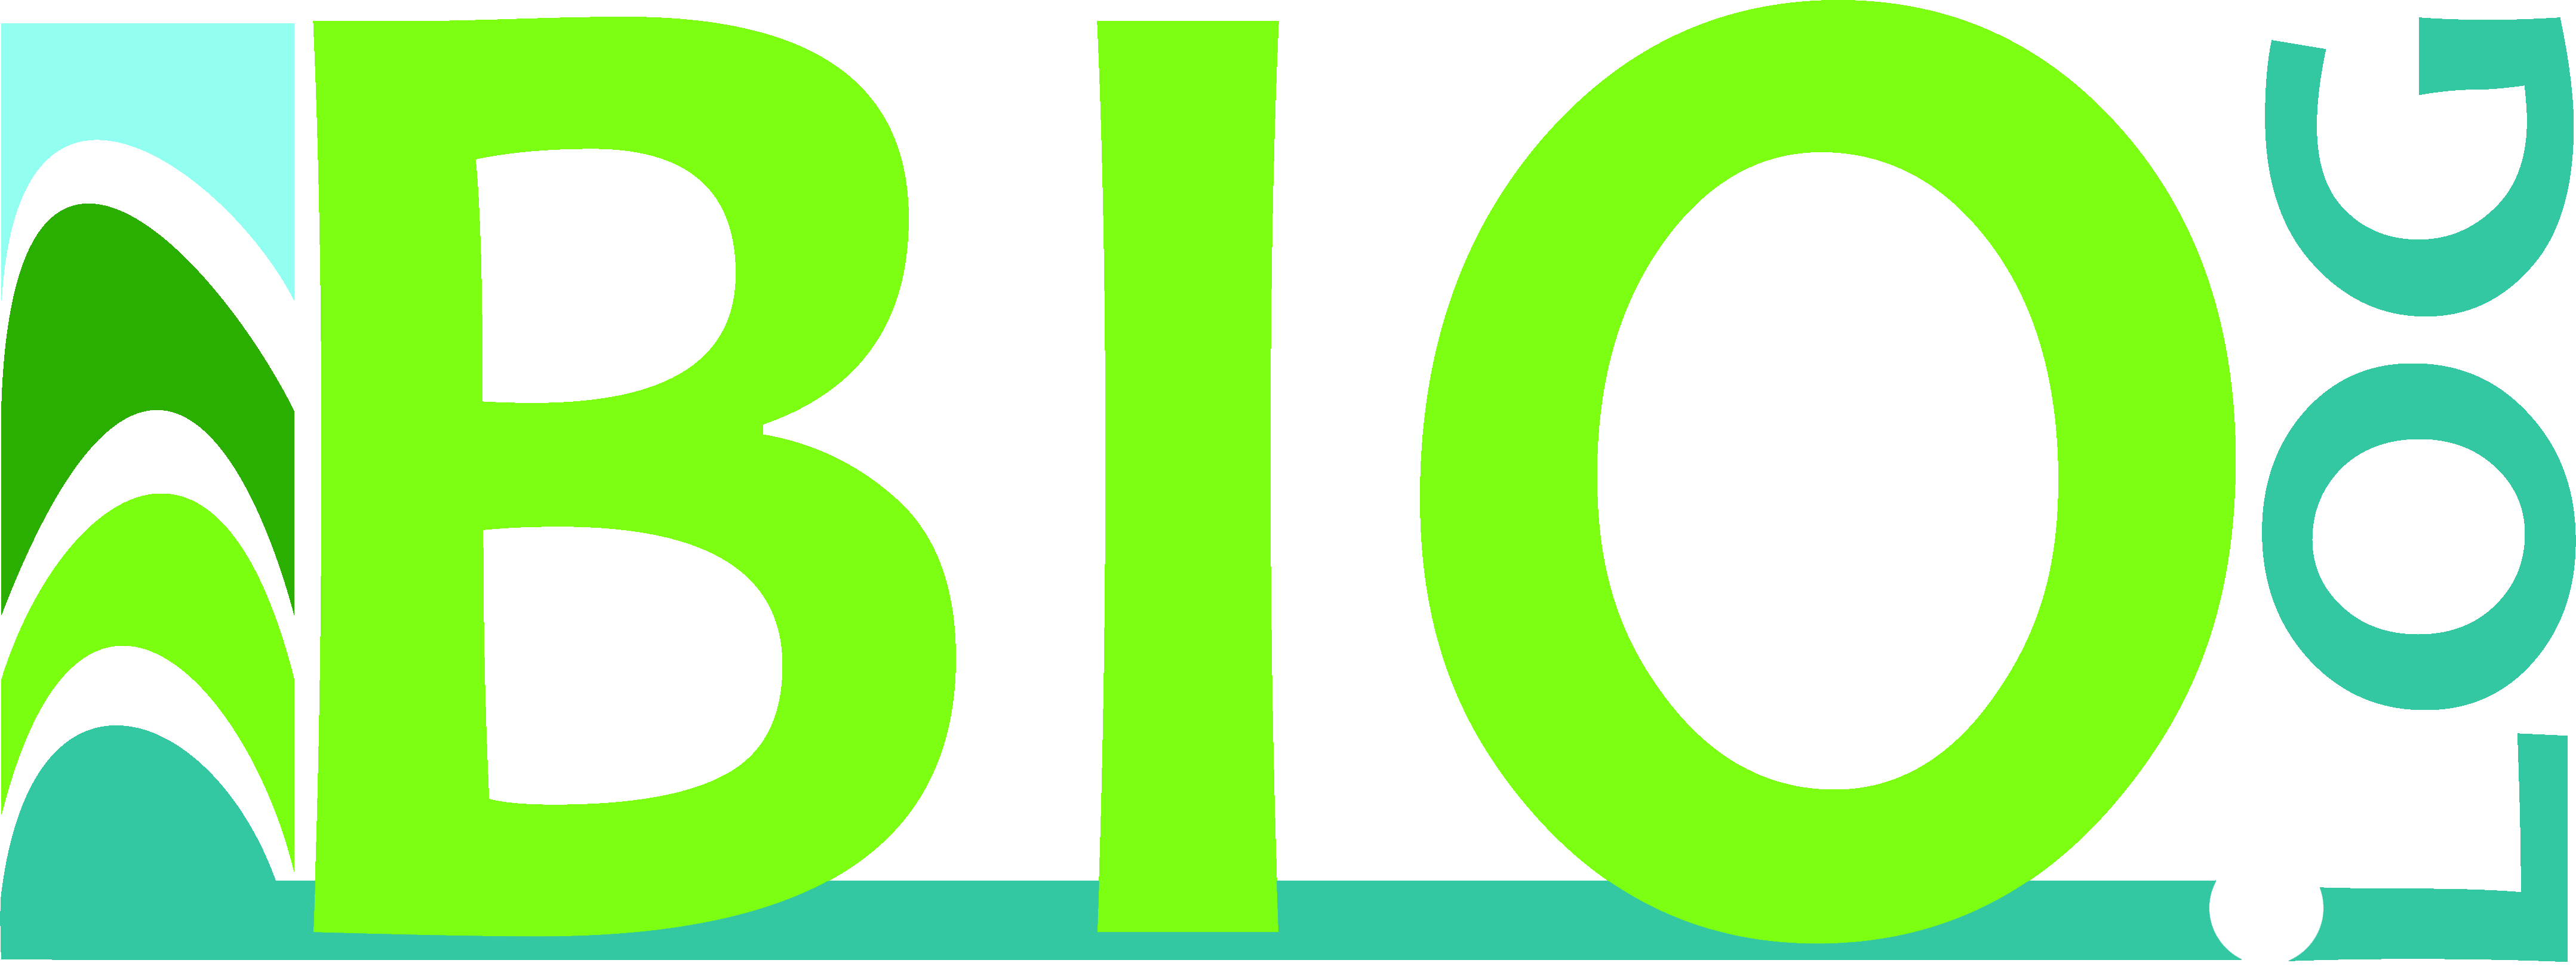 Bio.log (logo)